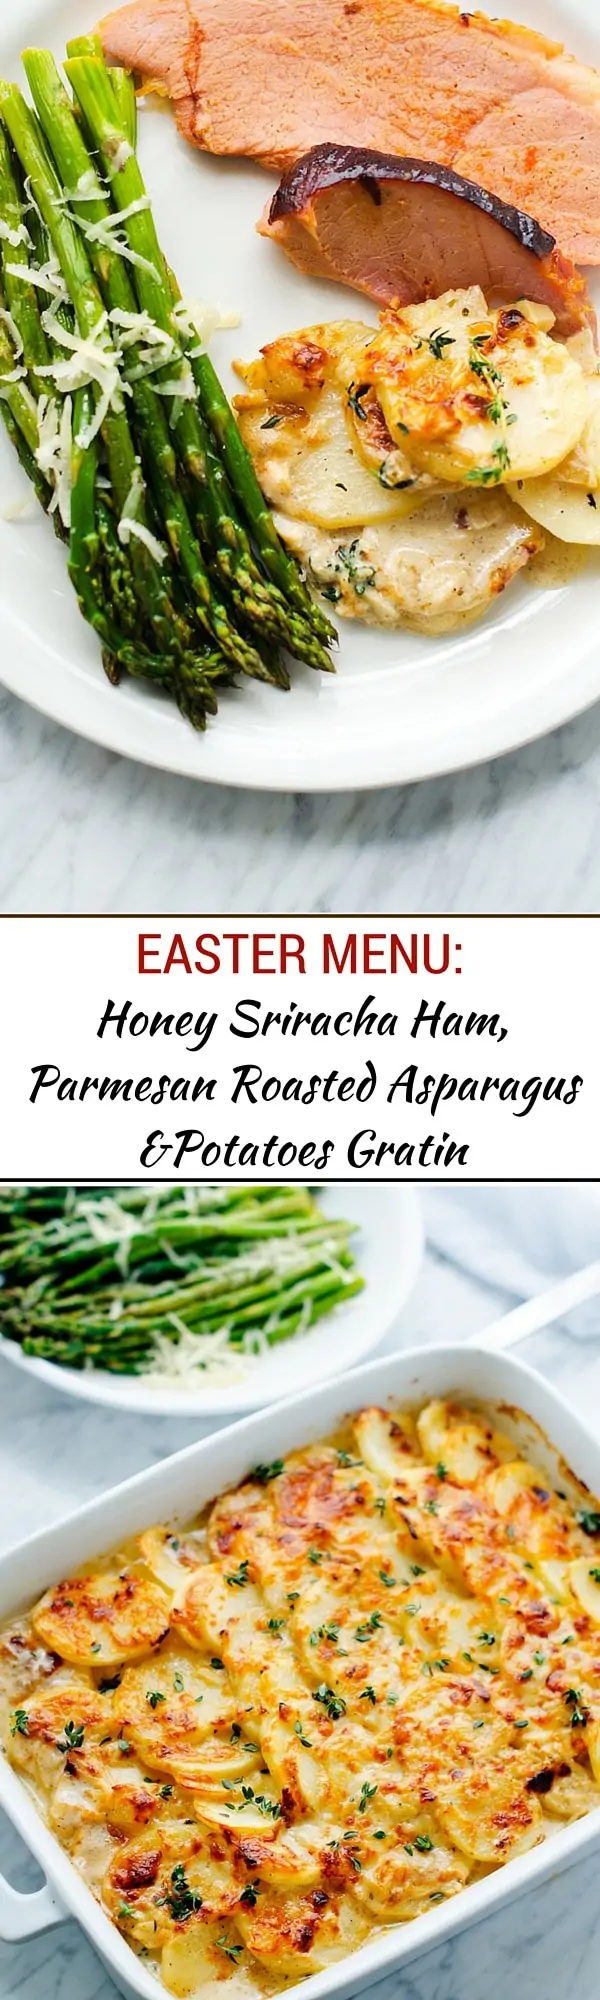 Our Easter Menu: Honey Sriracha Ham, Goat Cheese Potatoes Gratin & Roasted Asparagus - - WendyPolisi.com 